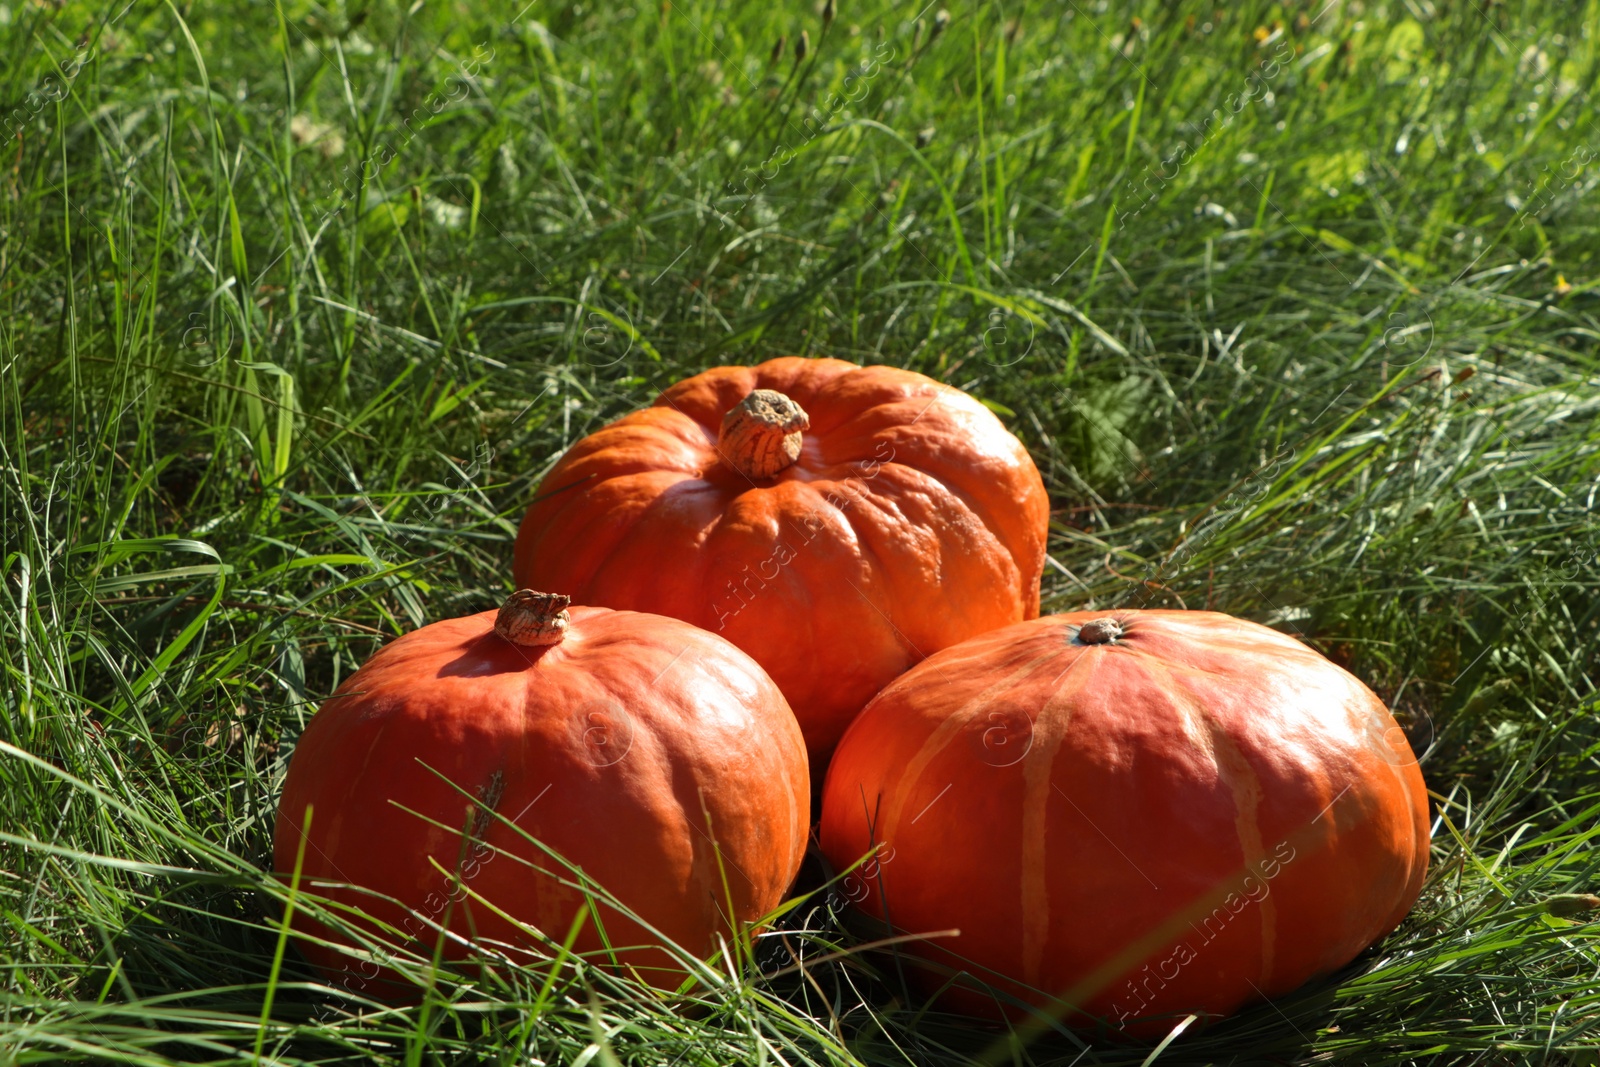 Photo of Whole ripe orange pumpkins among green grass outdoors